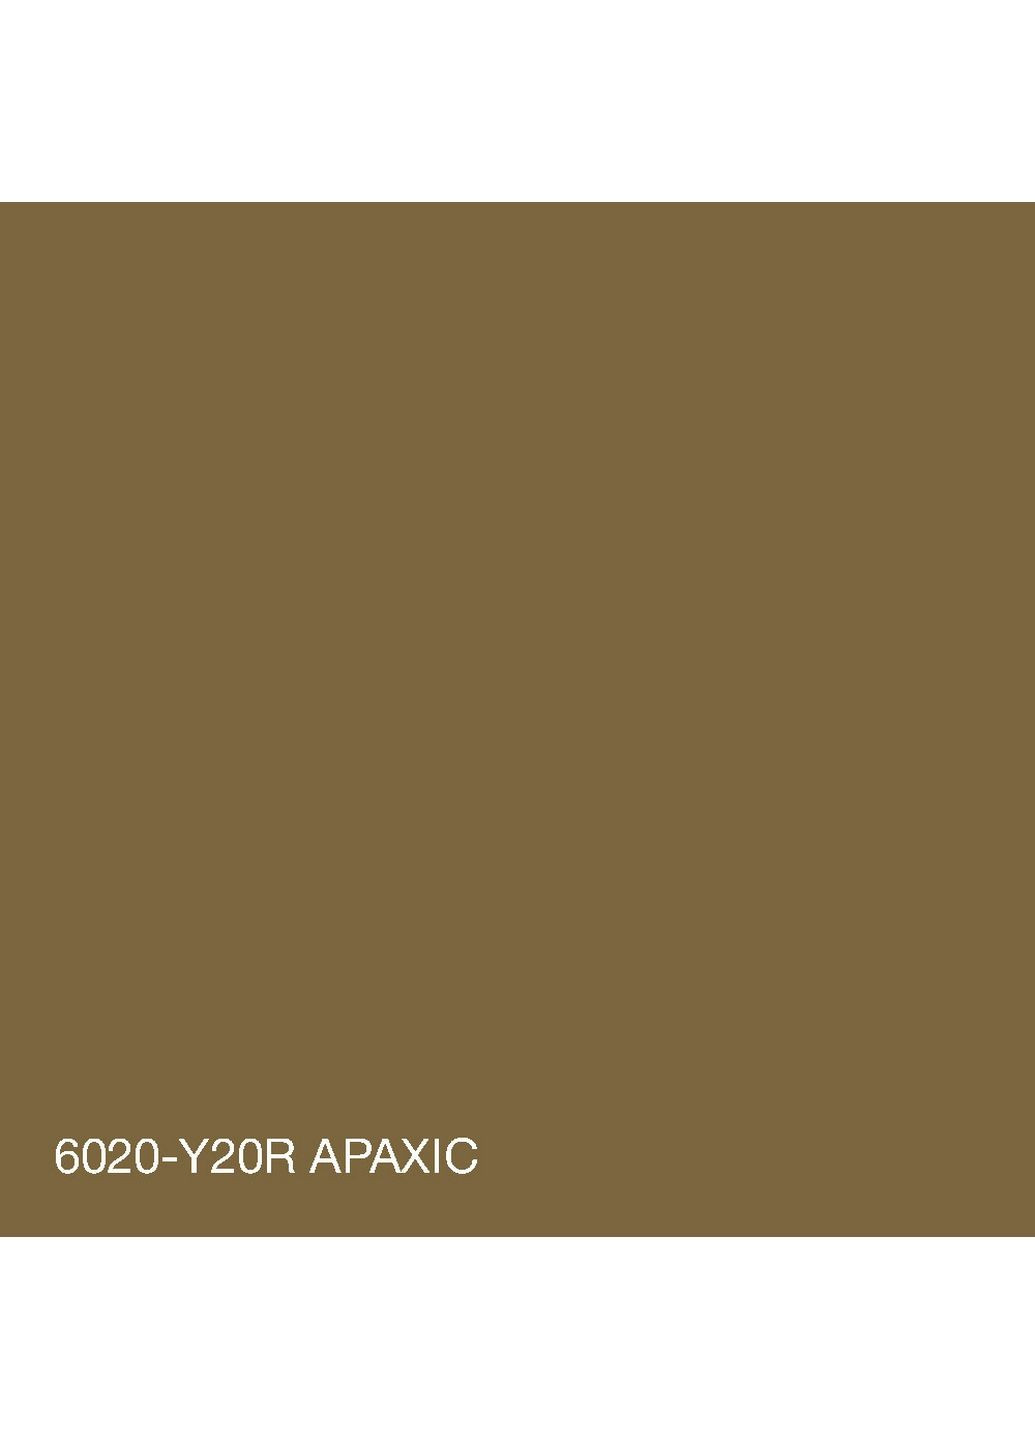 Фасадна фарба акрил-латексна 6020-Y20R 10 л SkyLine (283326588)